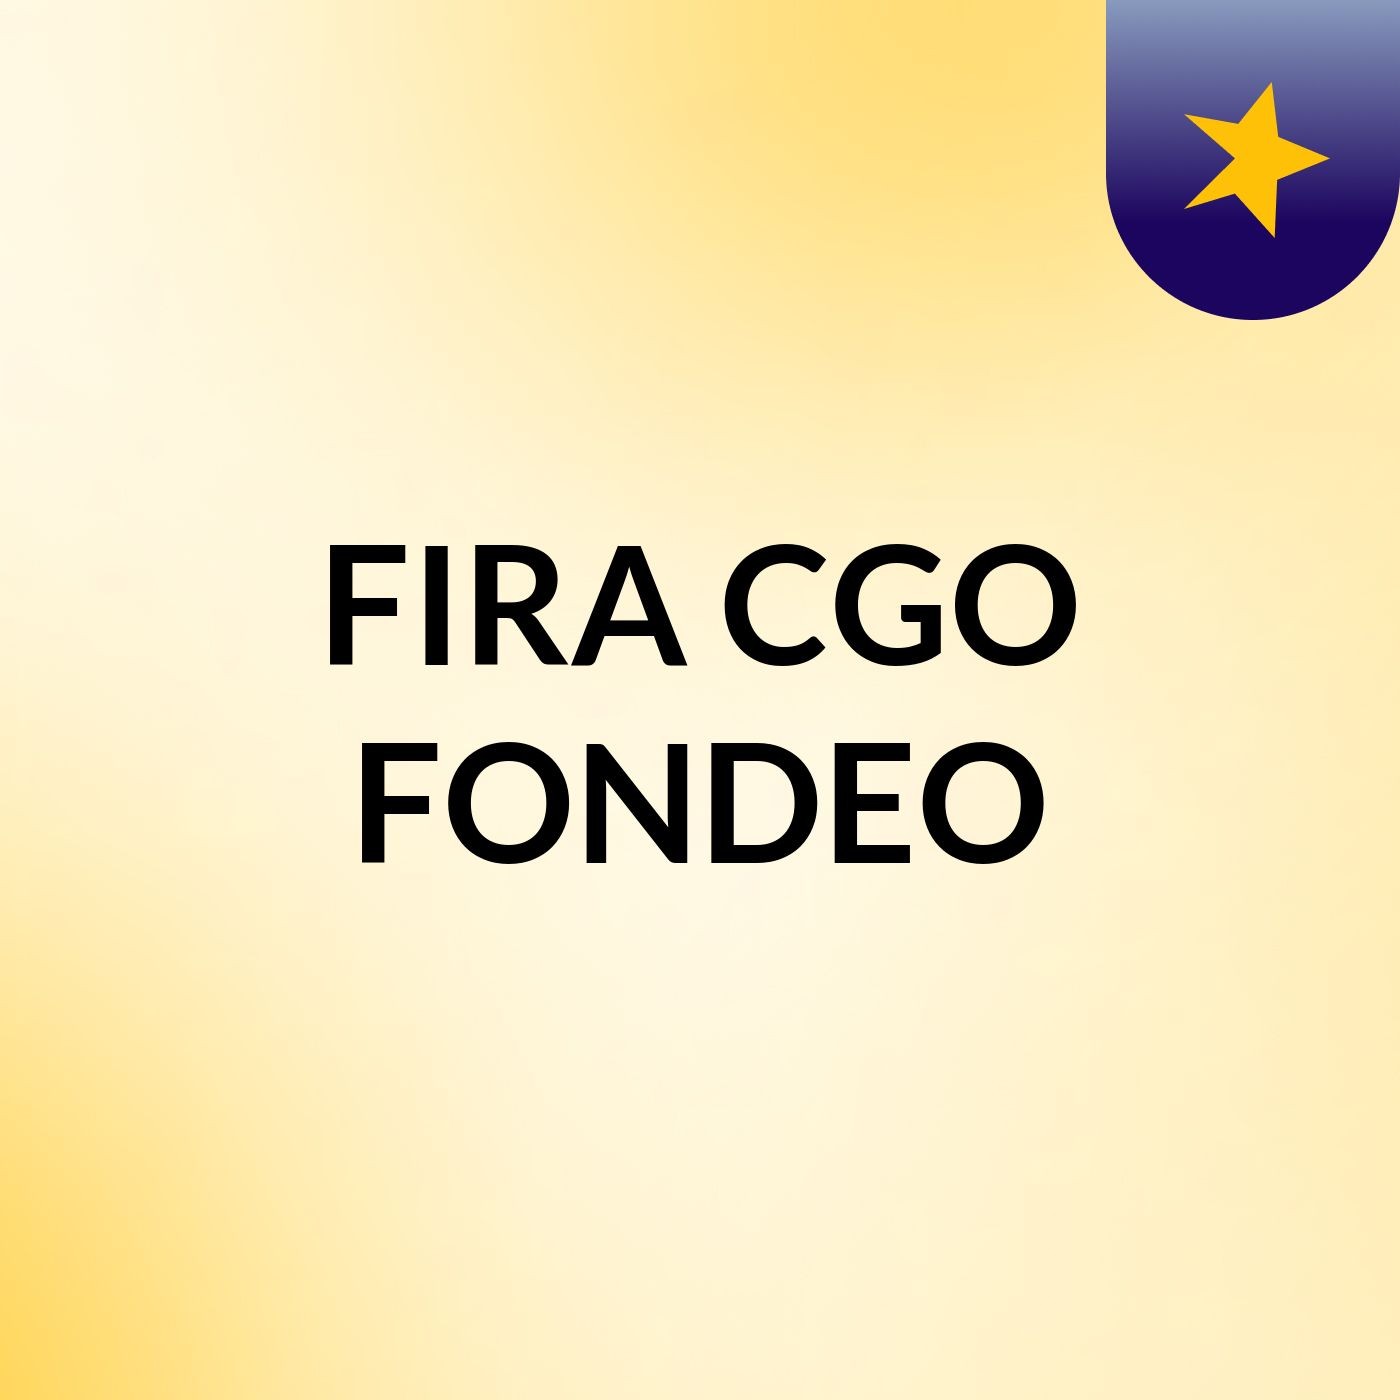 FIRA CGO FONDEO